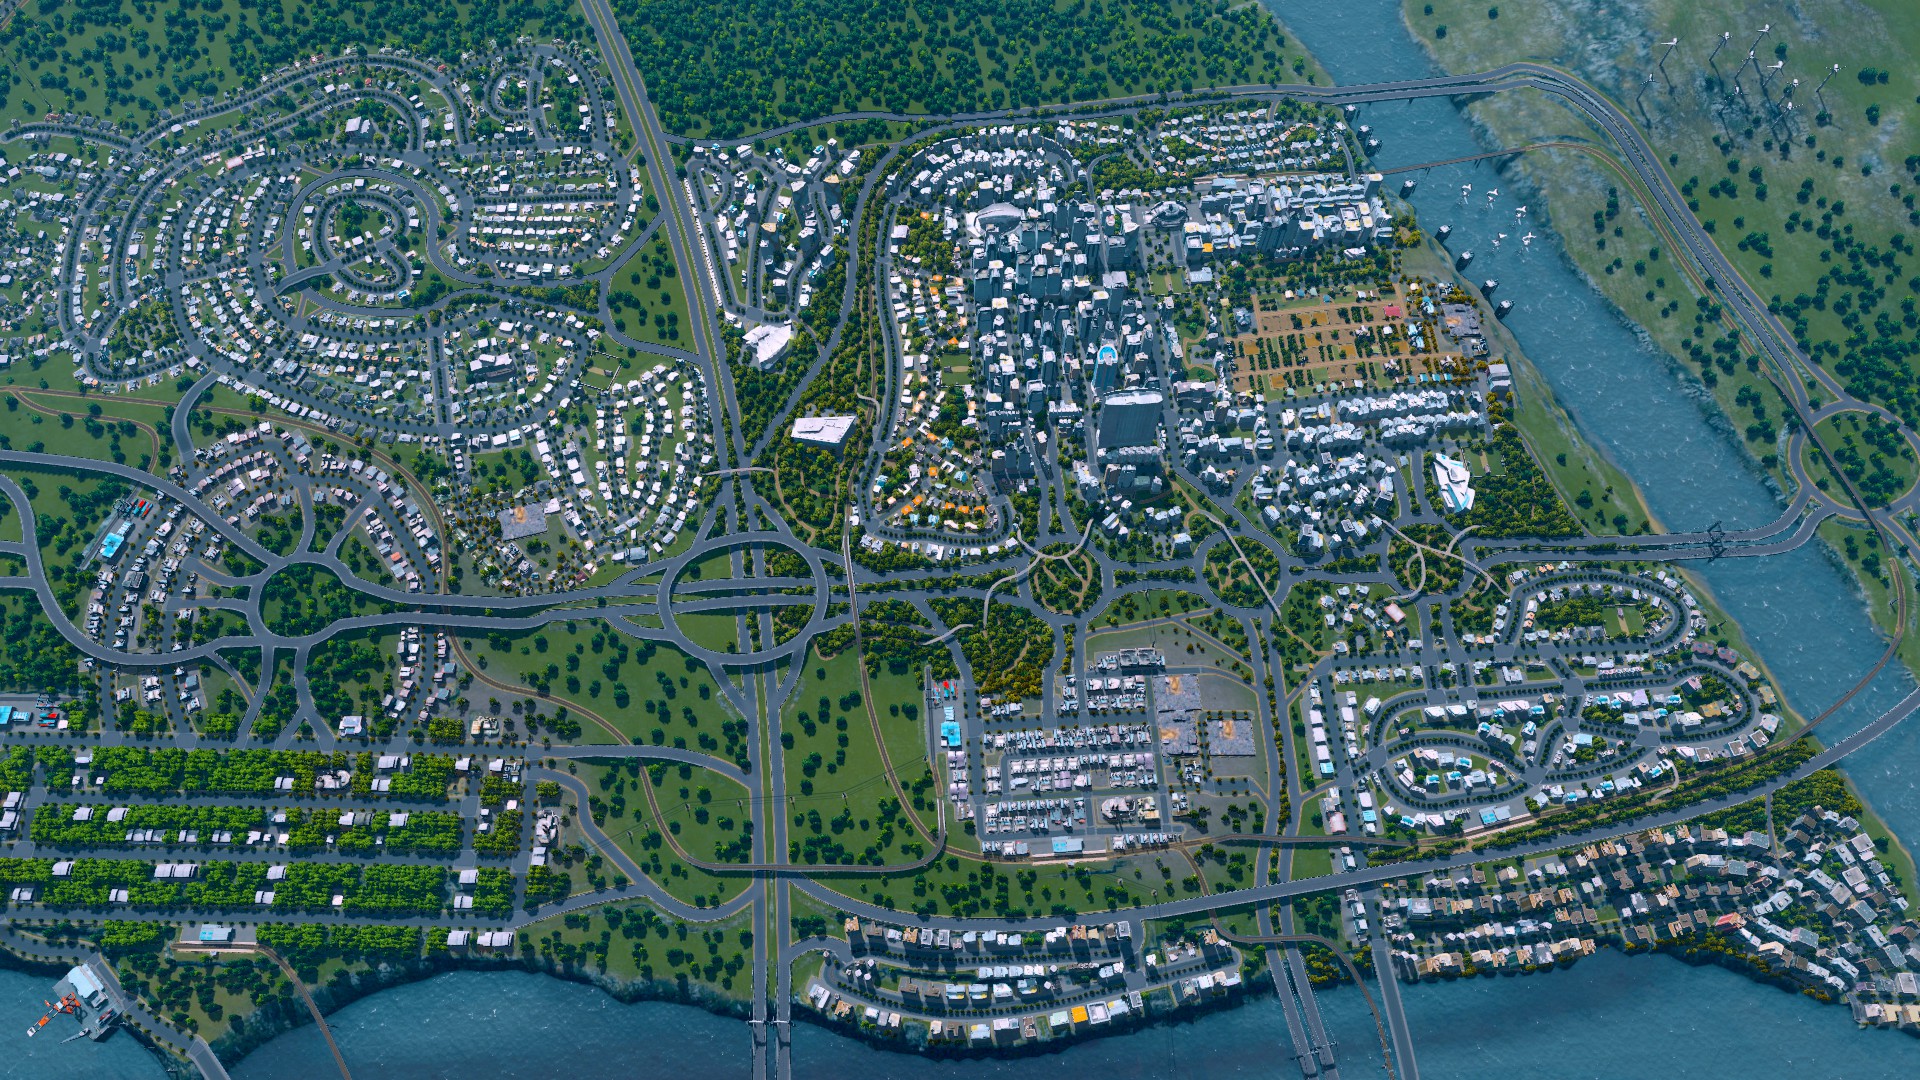 Cities Skylines Paradox Interactive